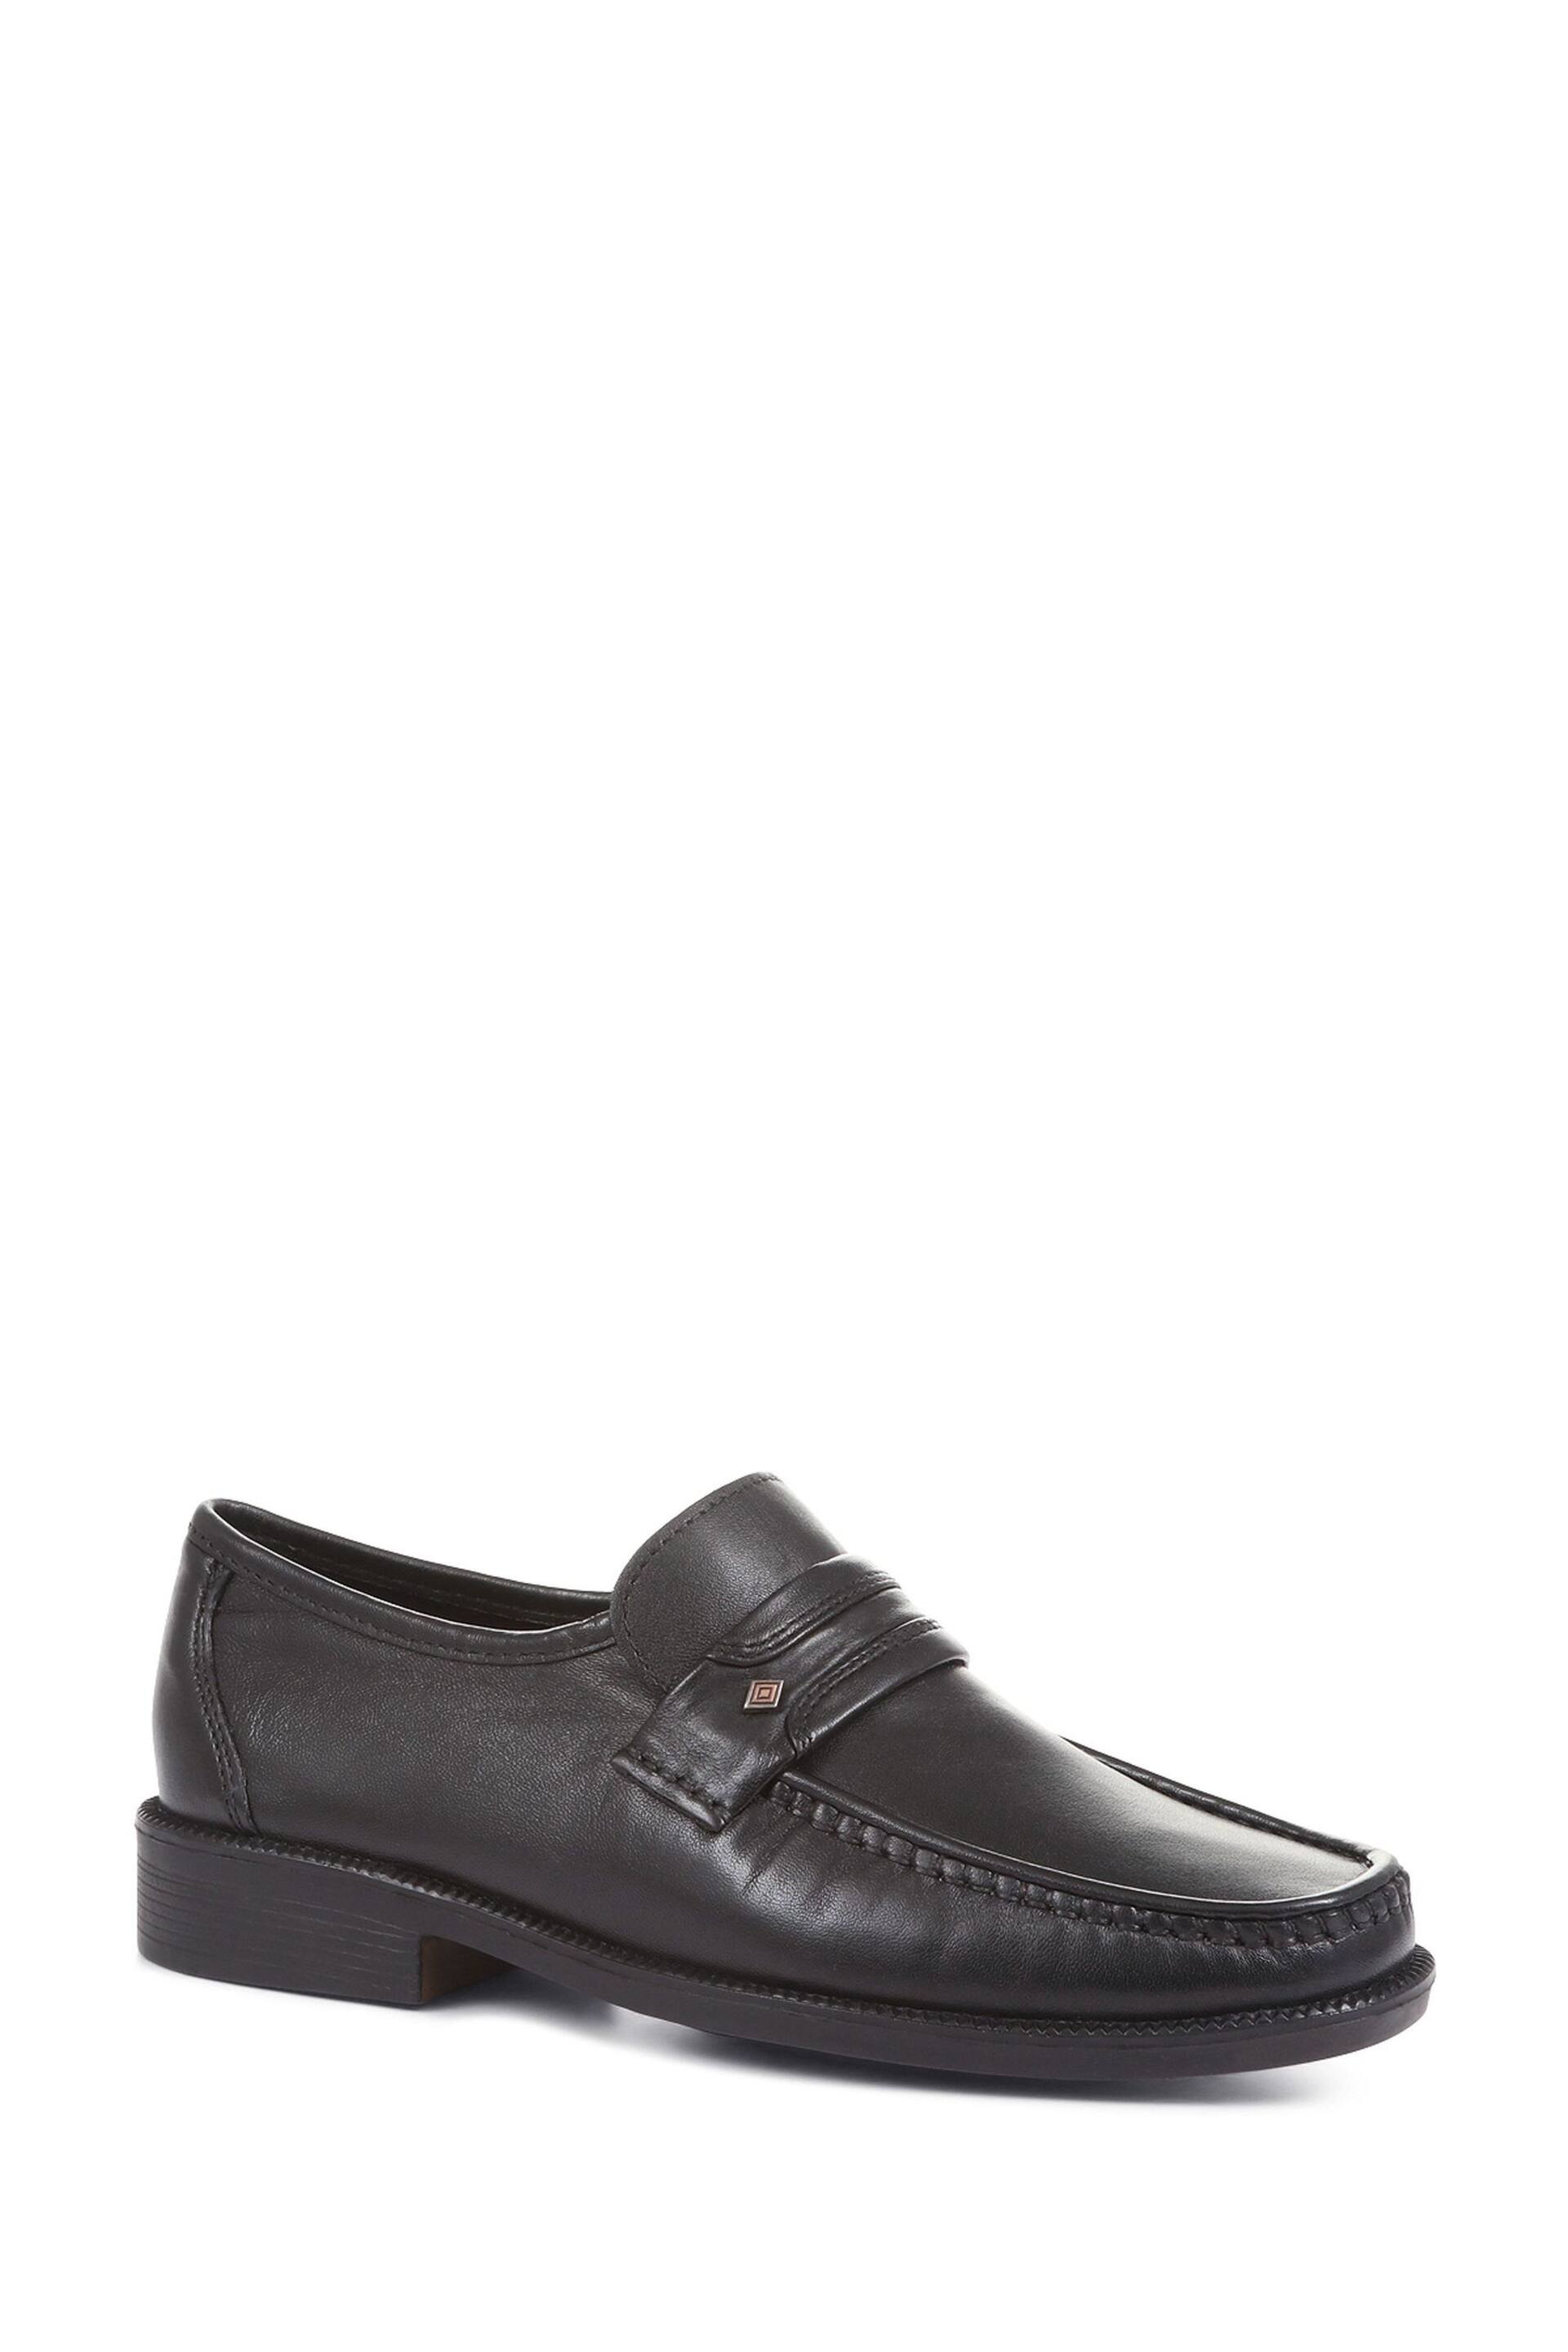 Pavers Gents Black Moccasin Smart Shoes - Image 2 of 5